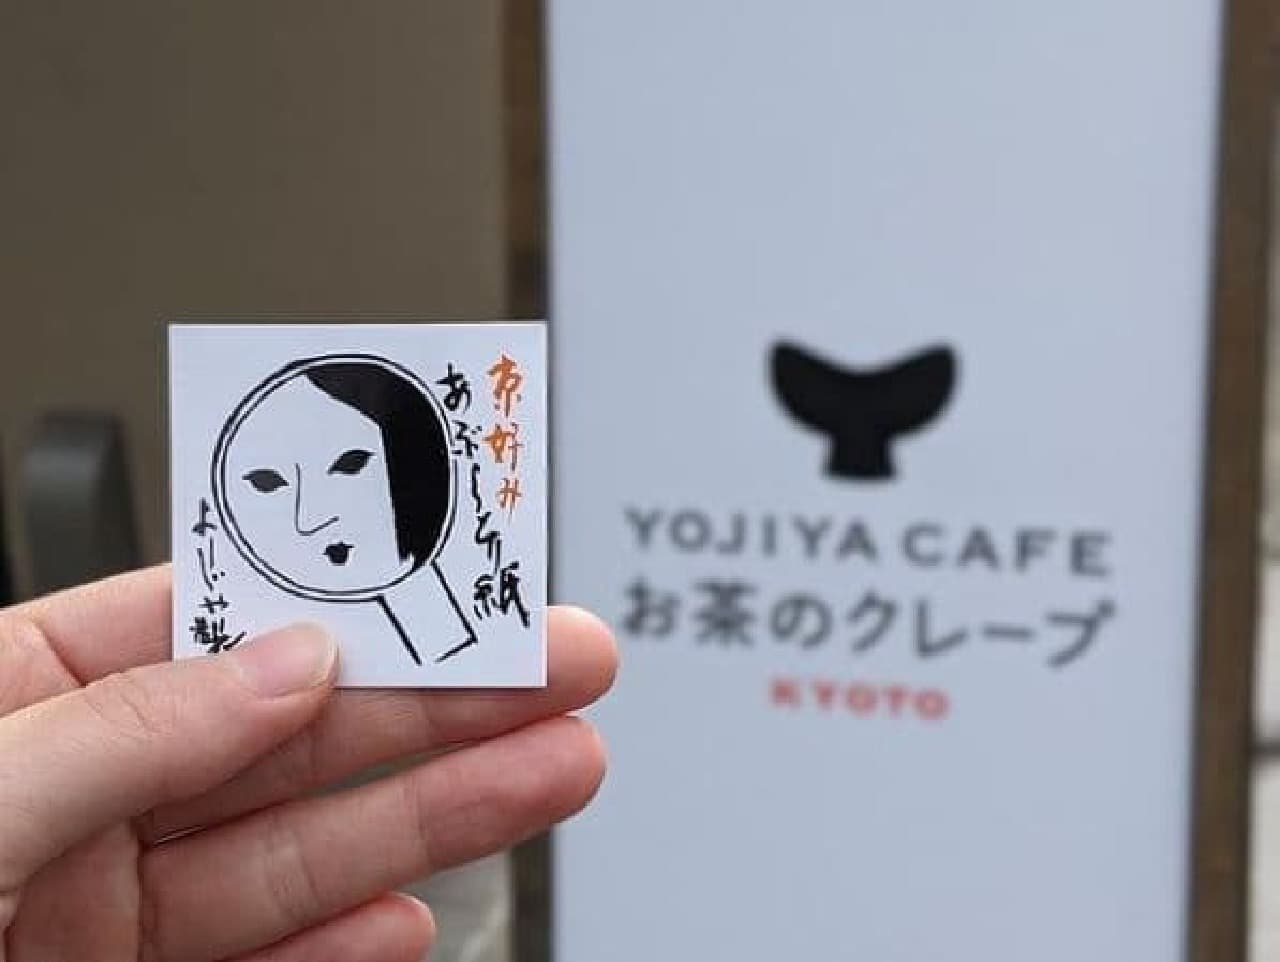 YOJIYA CAFE Tea Crepe